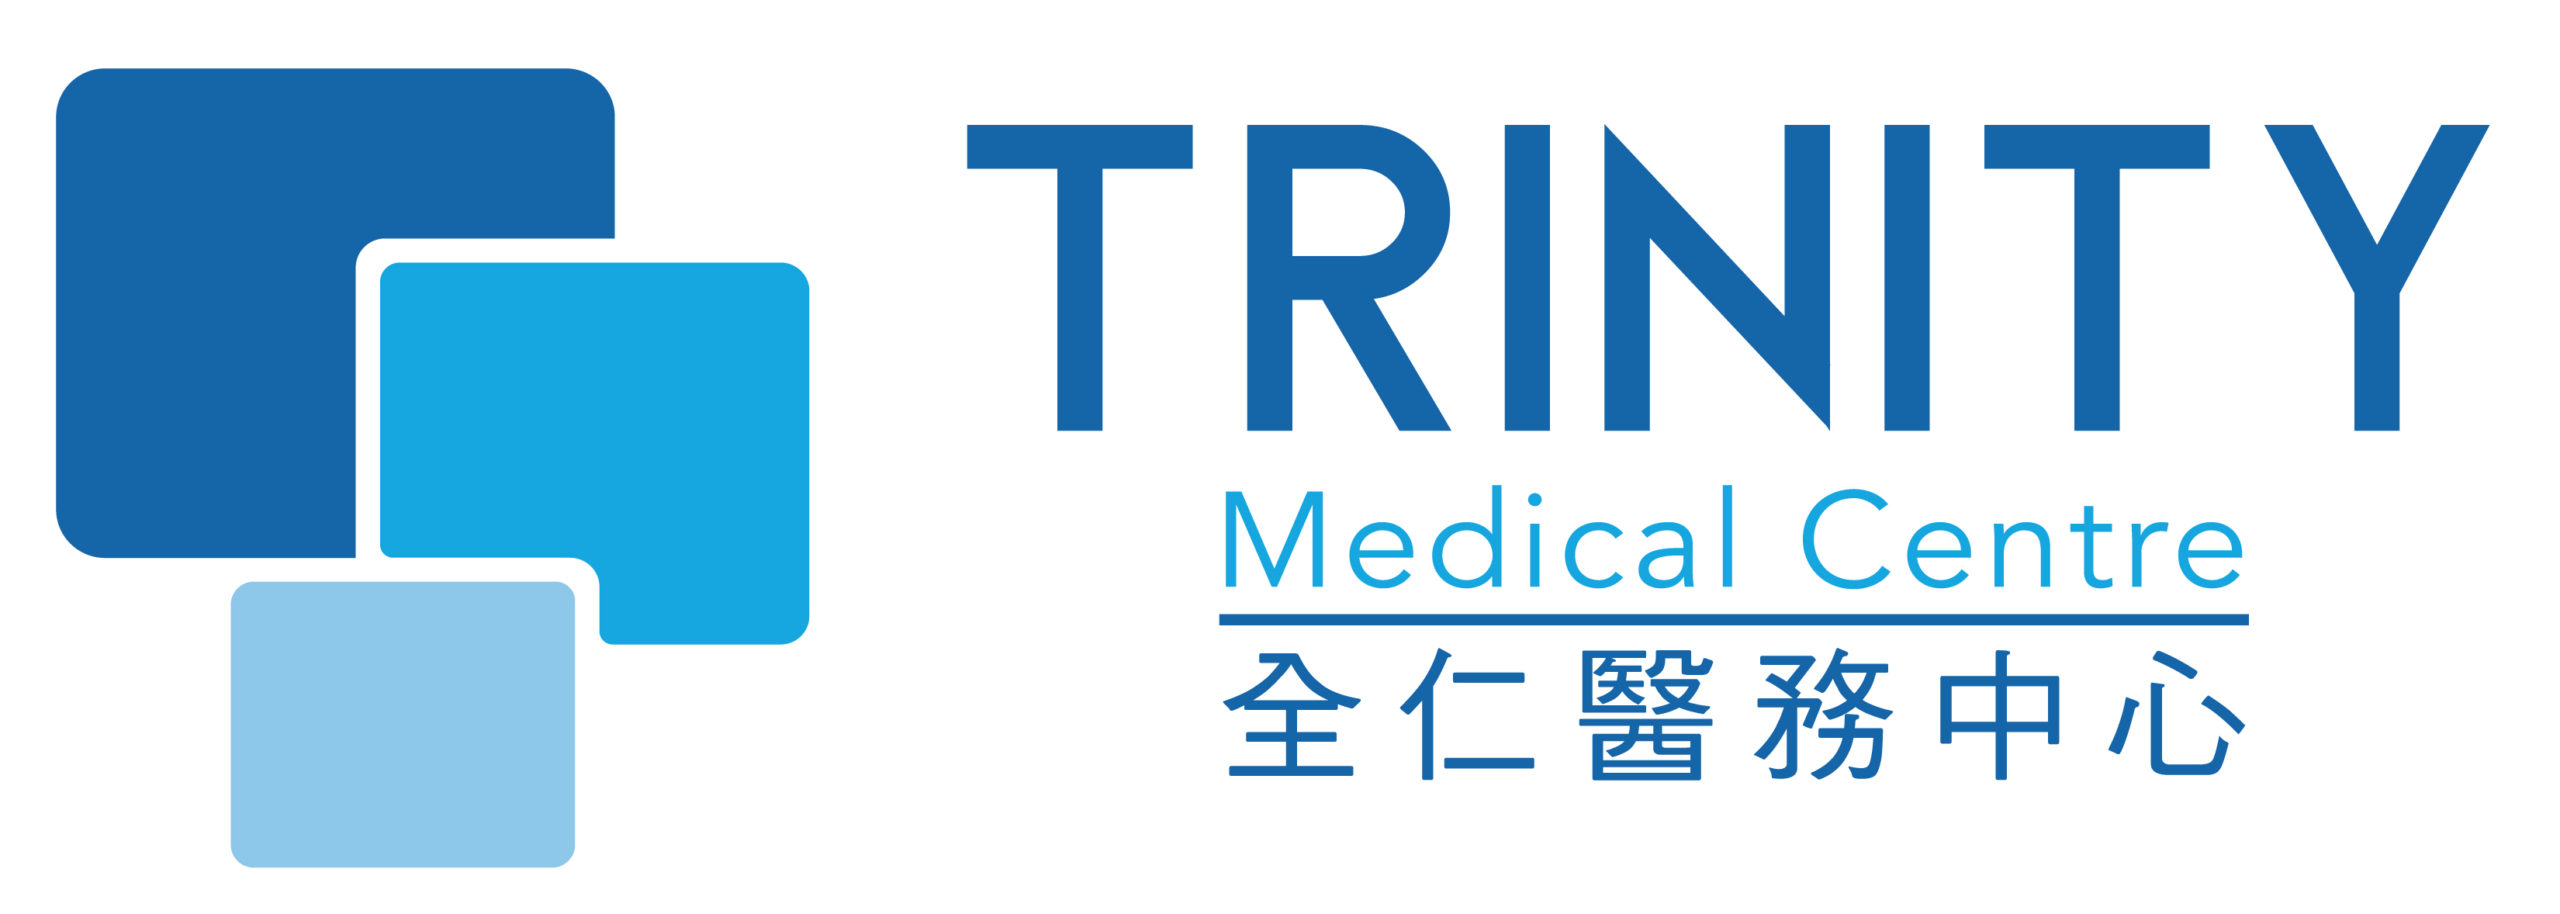 Trinity Medical Centre Logo - Trinity Medical Centre 全仁醫務中心